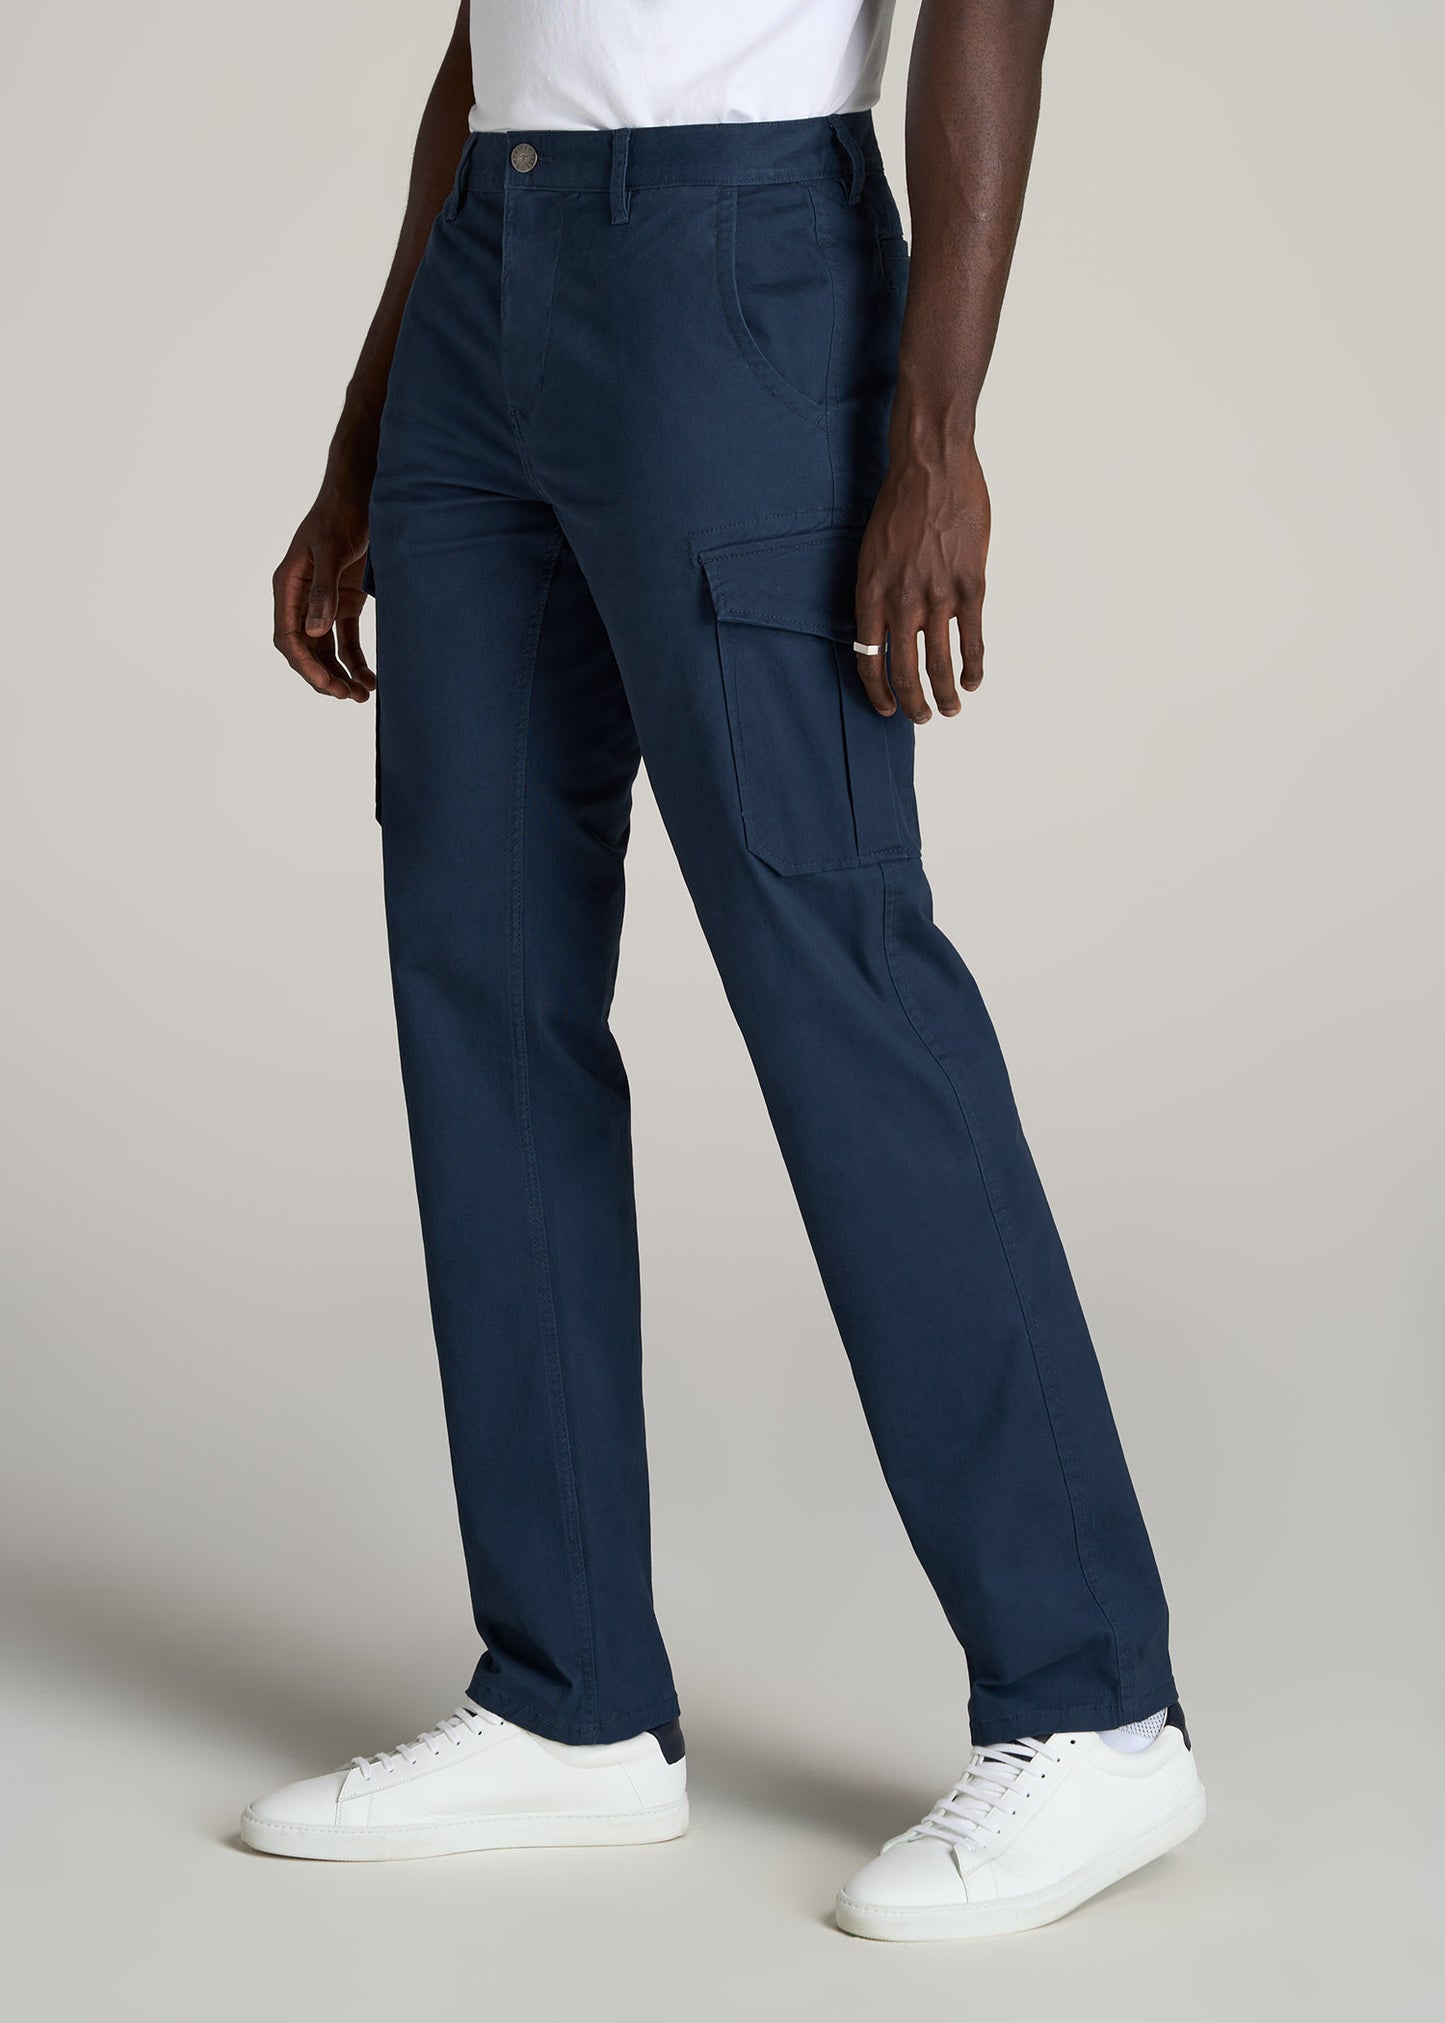 Twill Cargo Pants - Navy blue - Ladies